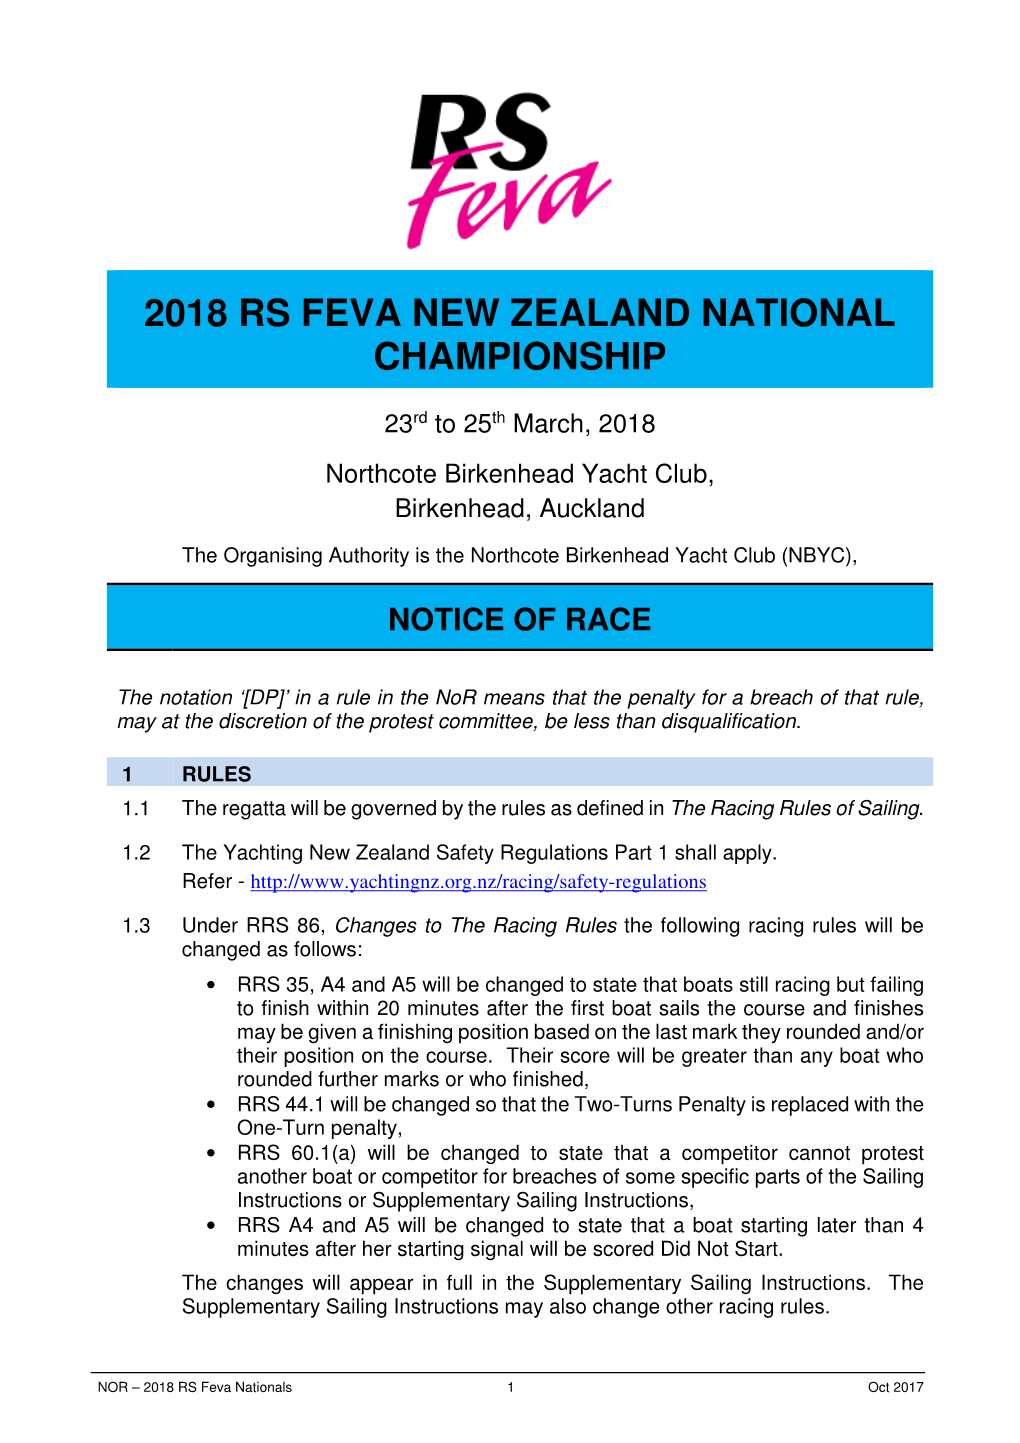 2018 Rs Feva New Zealand National Championship